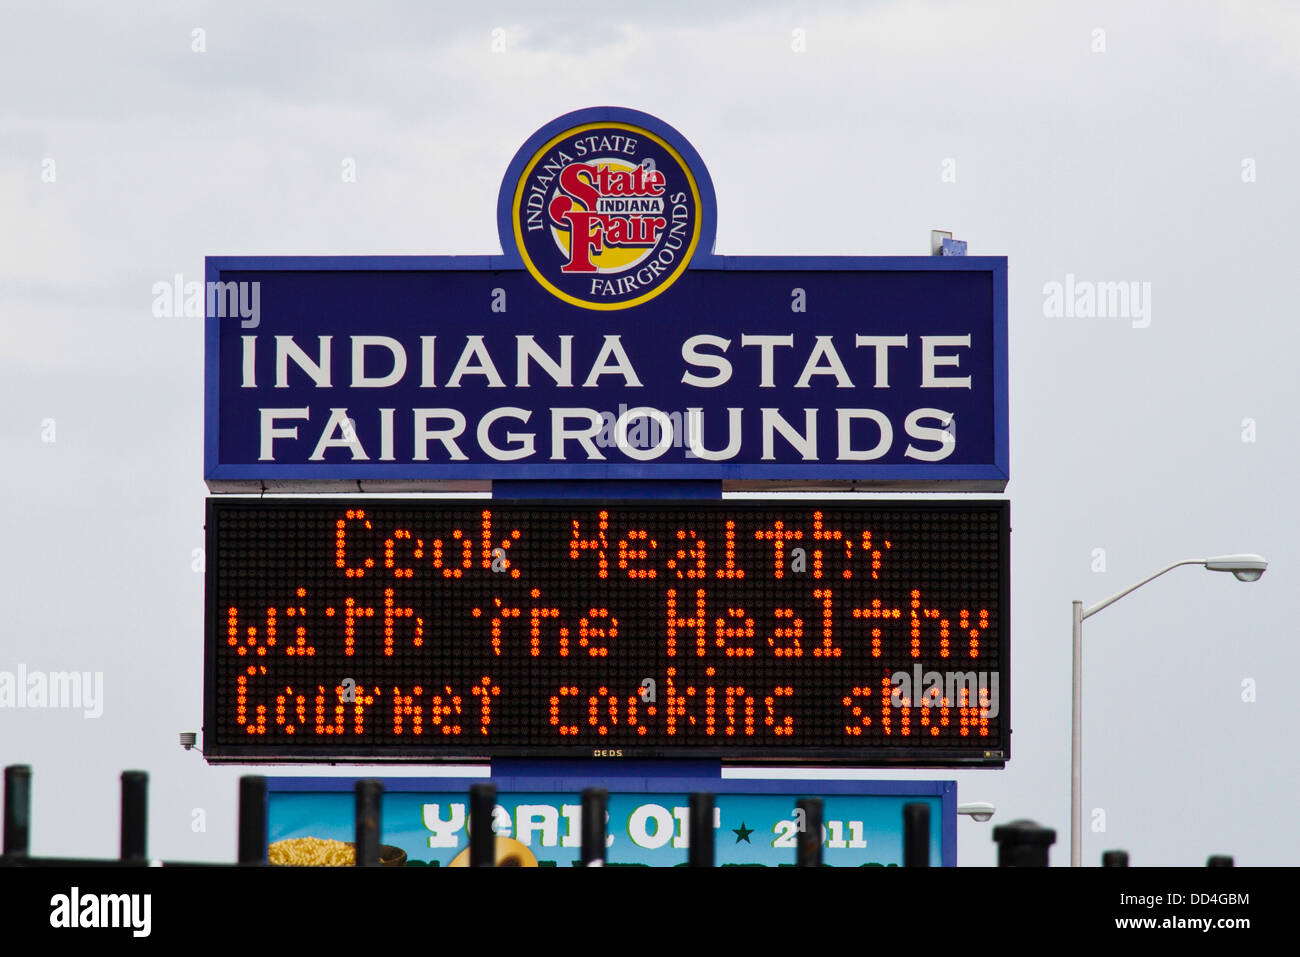 Indiana State Fair bienvenue sign Banque D'Images